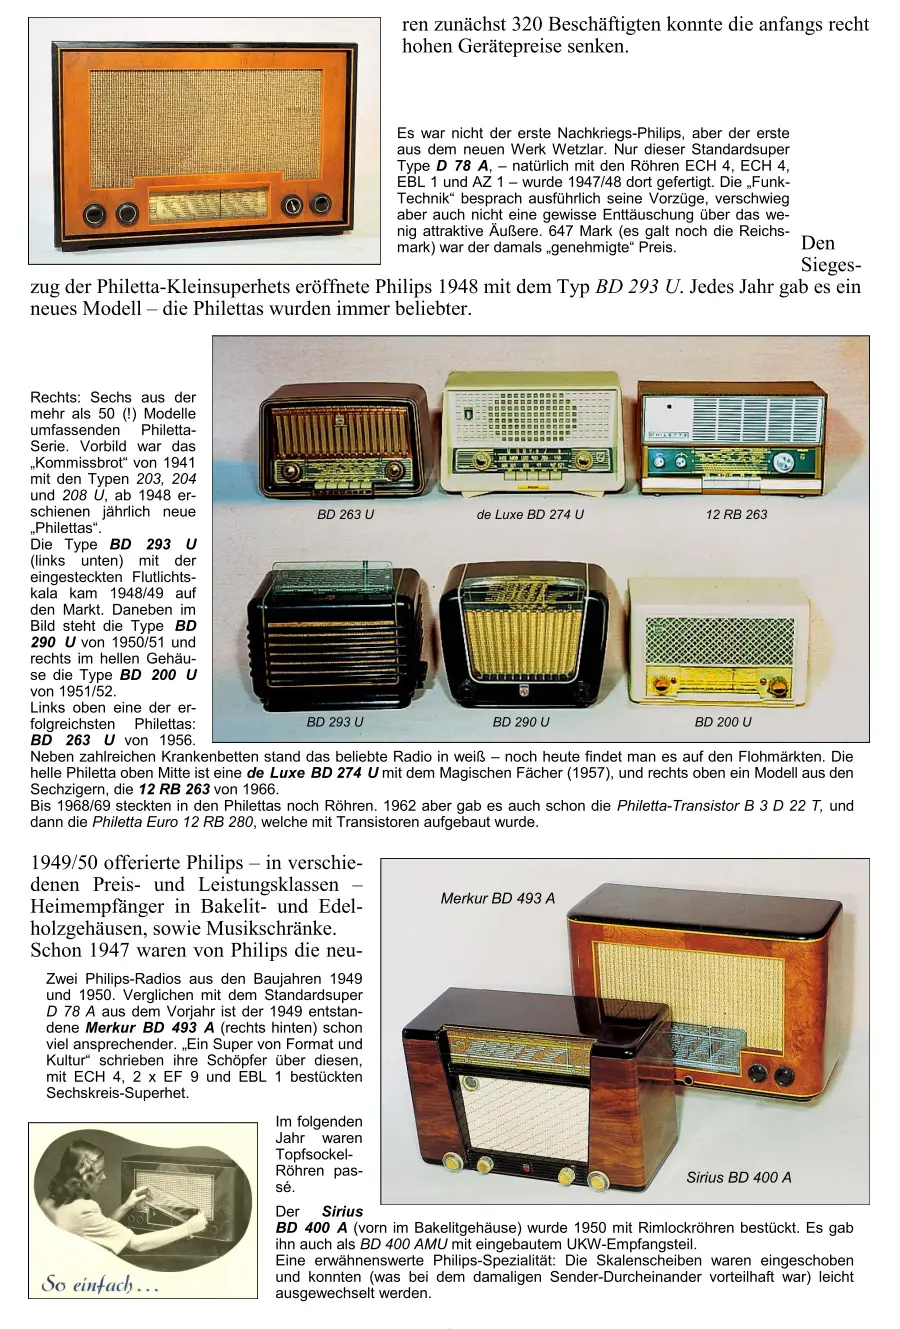 Philips Radiochronik Radiogeschichte Radiotechnik